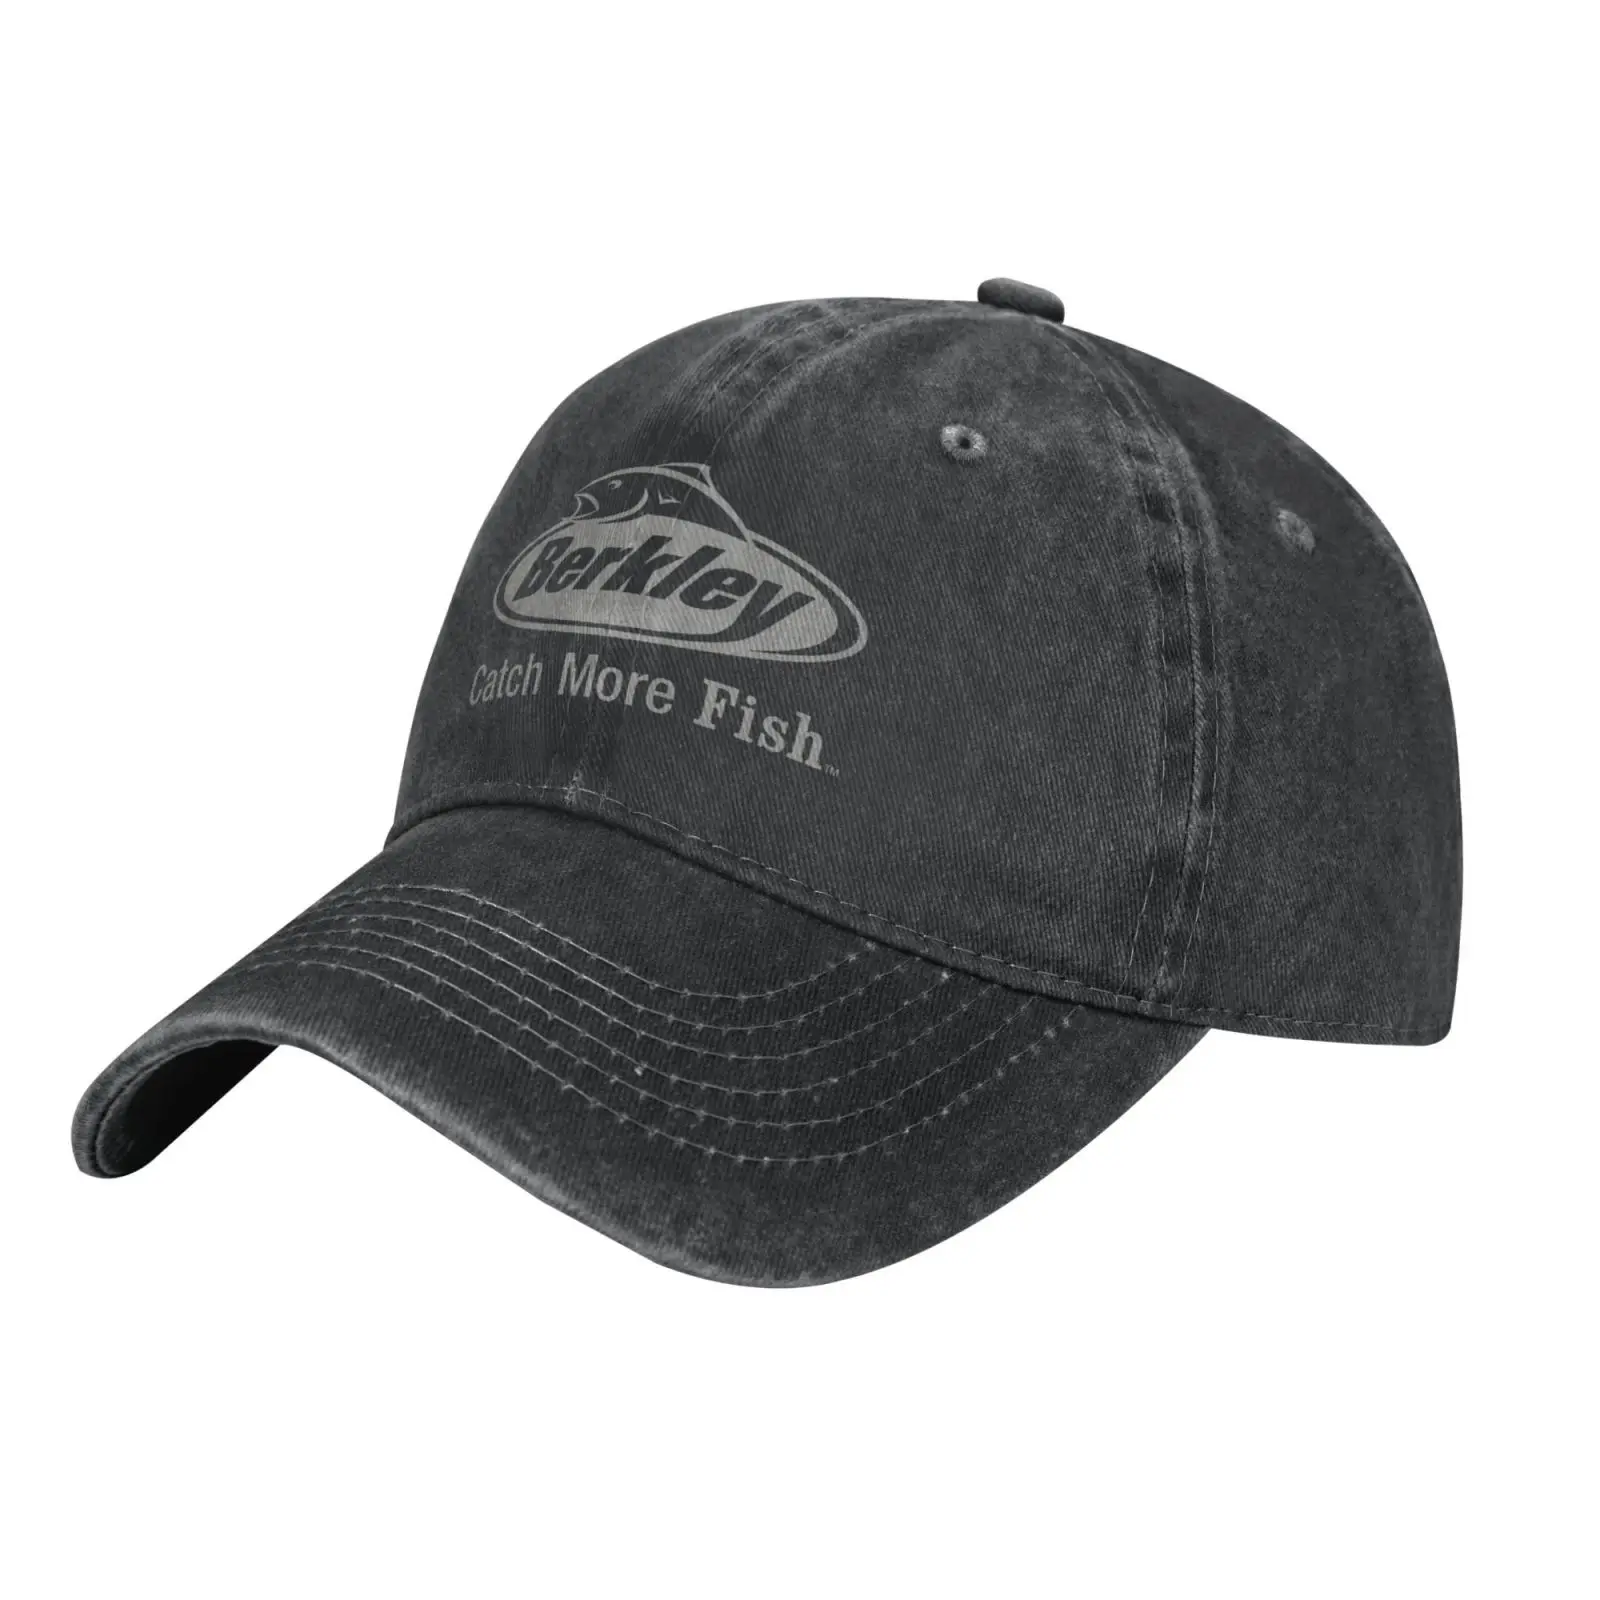 Berkley Fishing Hats  Trucker Cap - Baseball Caps - Aliexpress